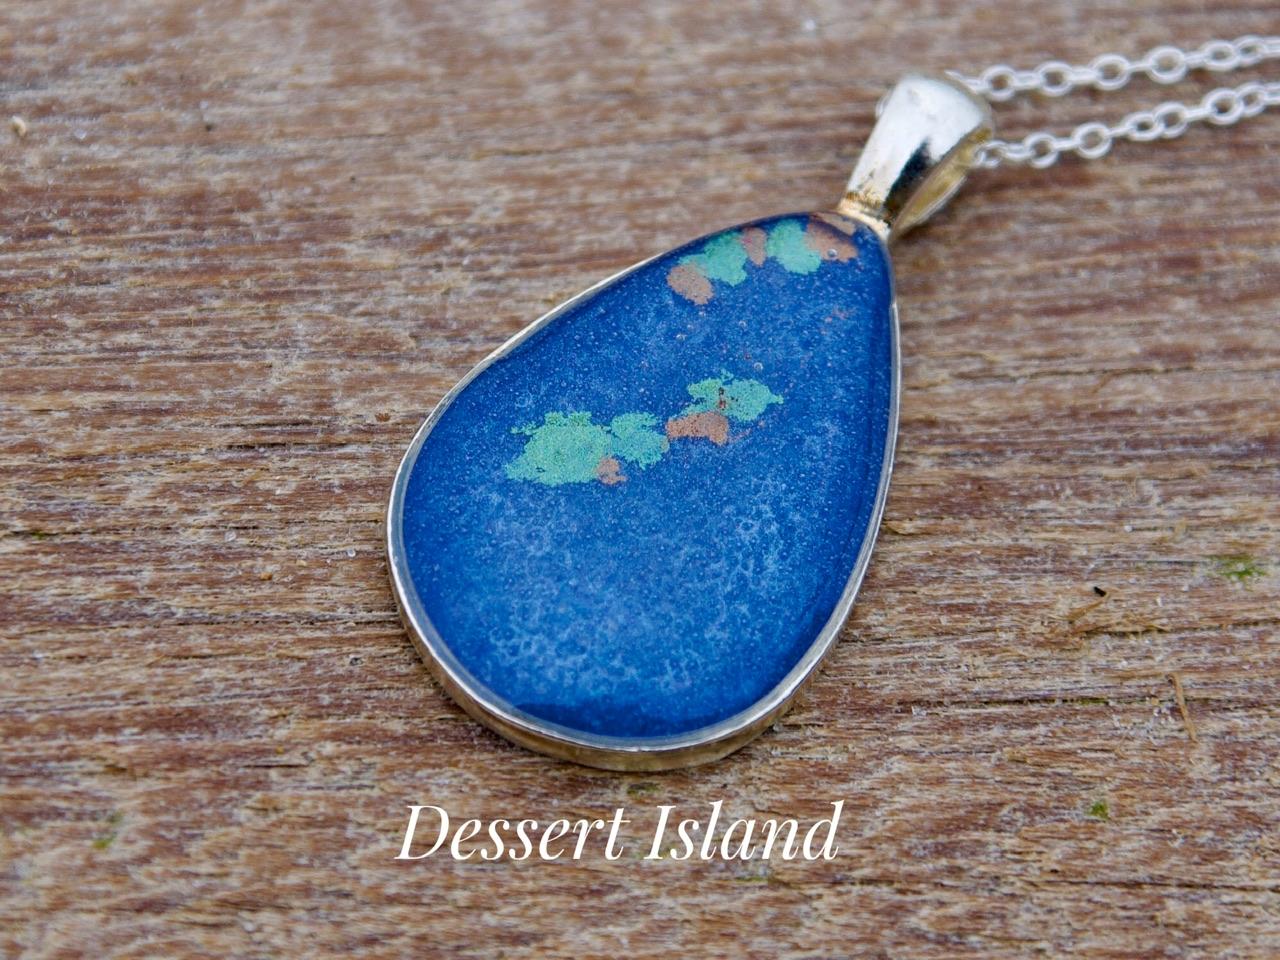 Ocean Island - Dessert Island